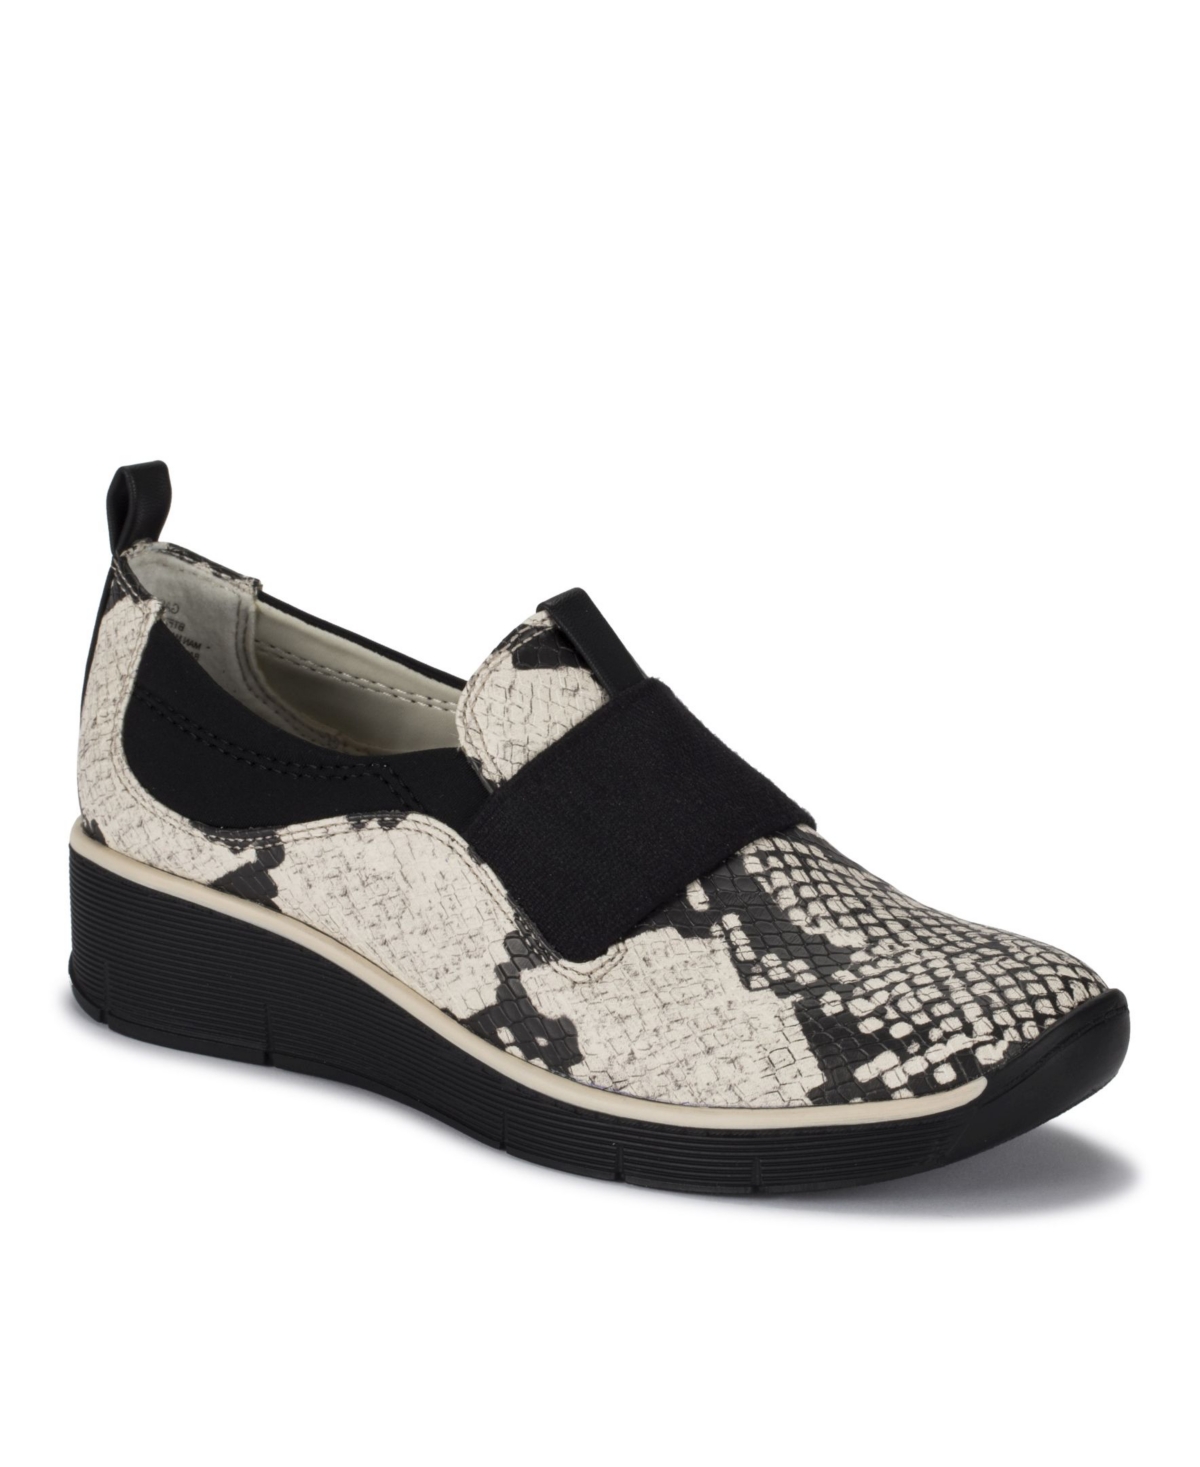 Baretraps Garner Women's Casual Slip-On Women's Shoes